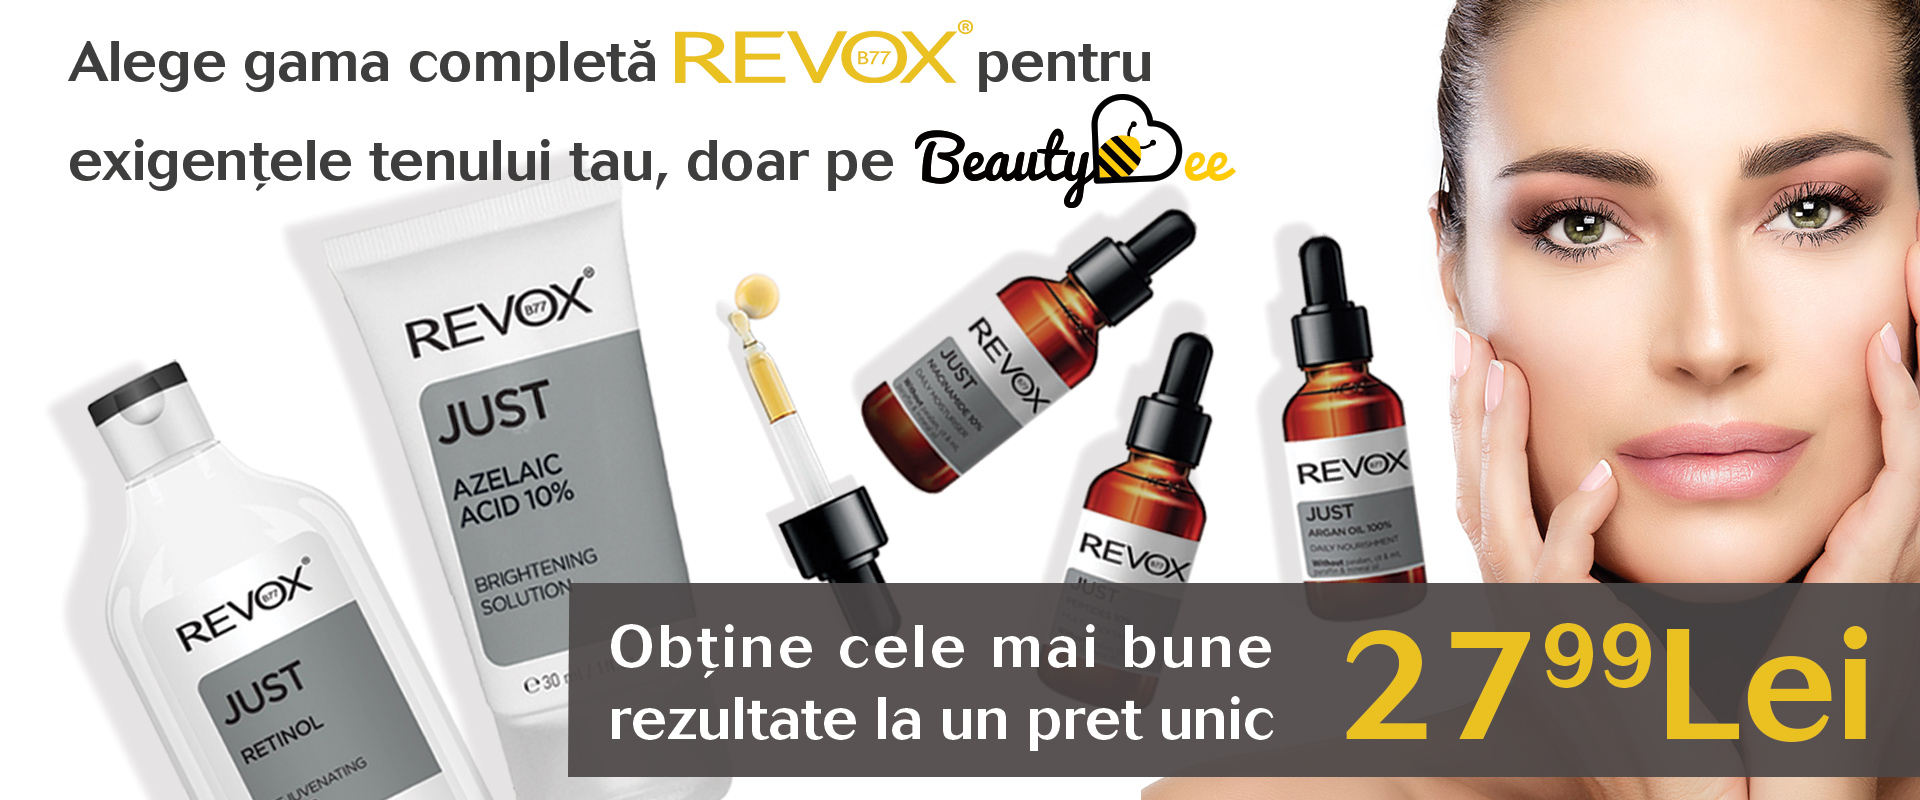 Vezi toate produsele REVOX.